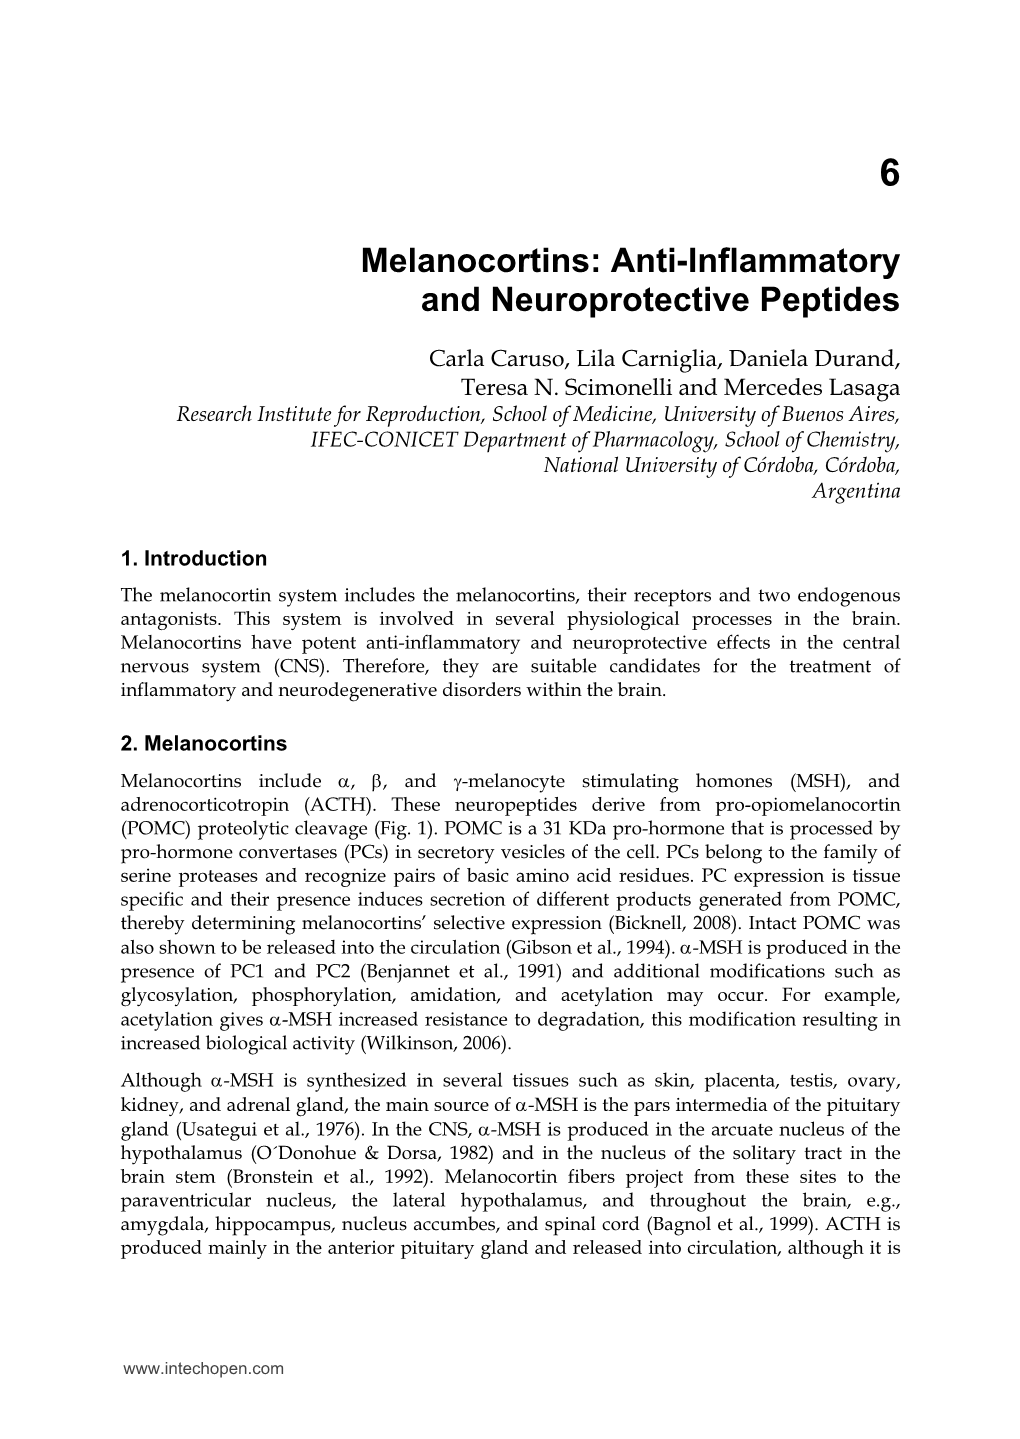 Melanocortins: Anti-Inflammatory and Neuroprotective Peptides